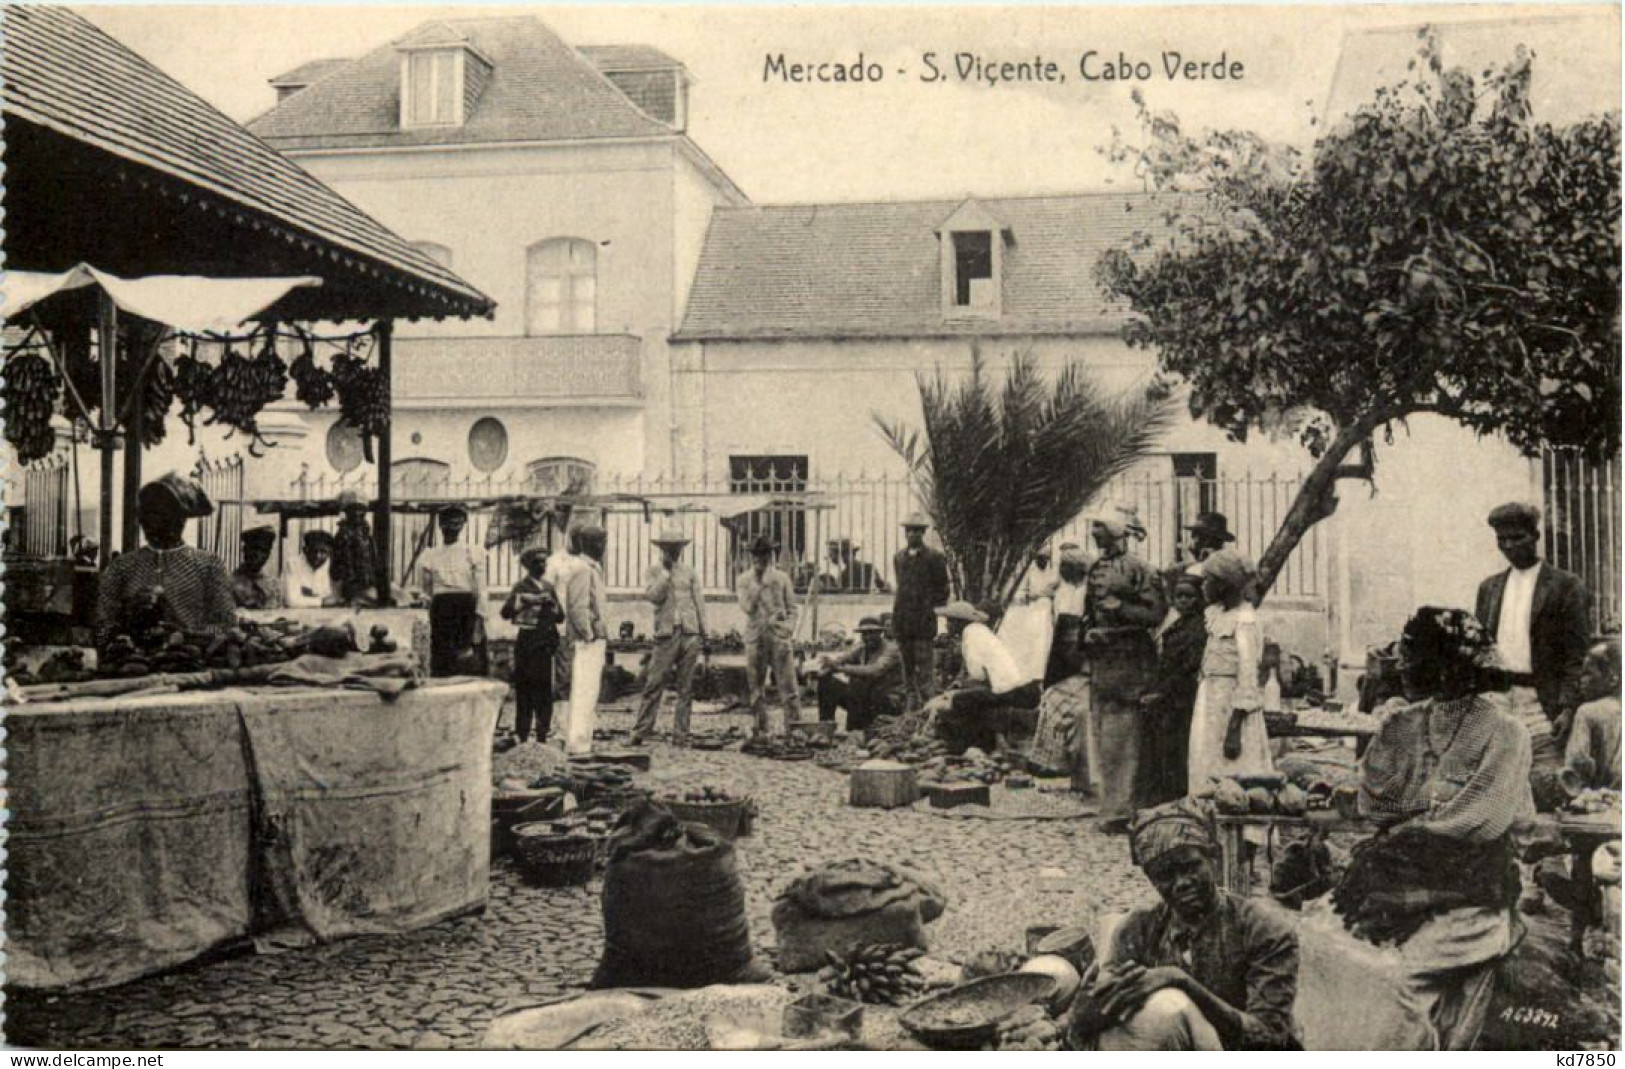 Cabo Verde - Mercado S. Vicente - Cap Verde